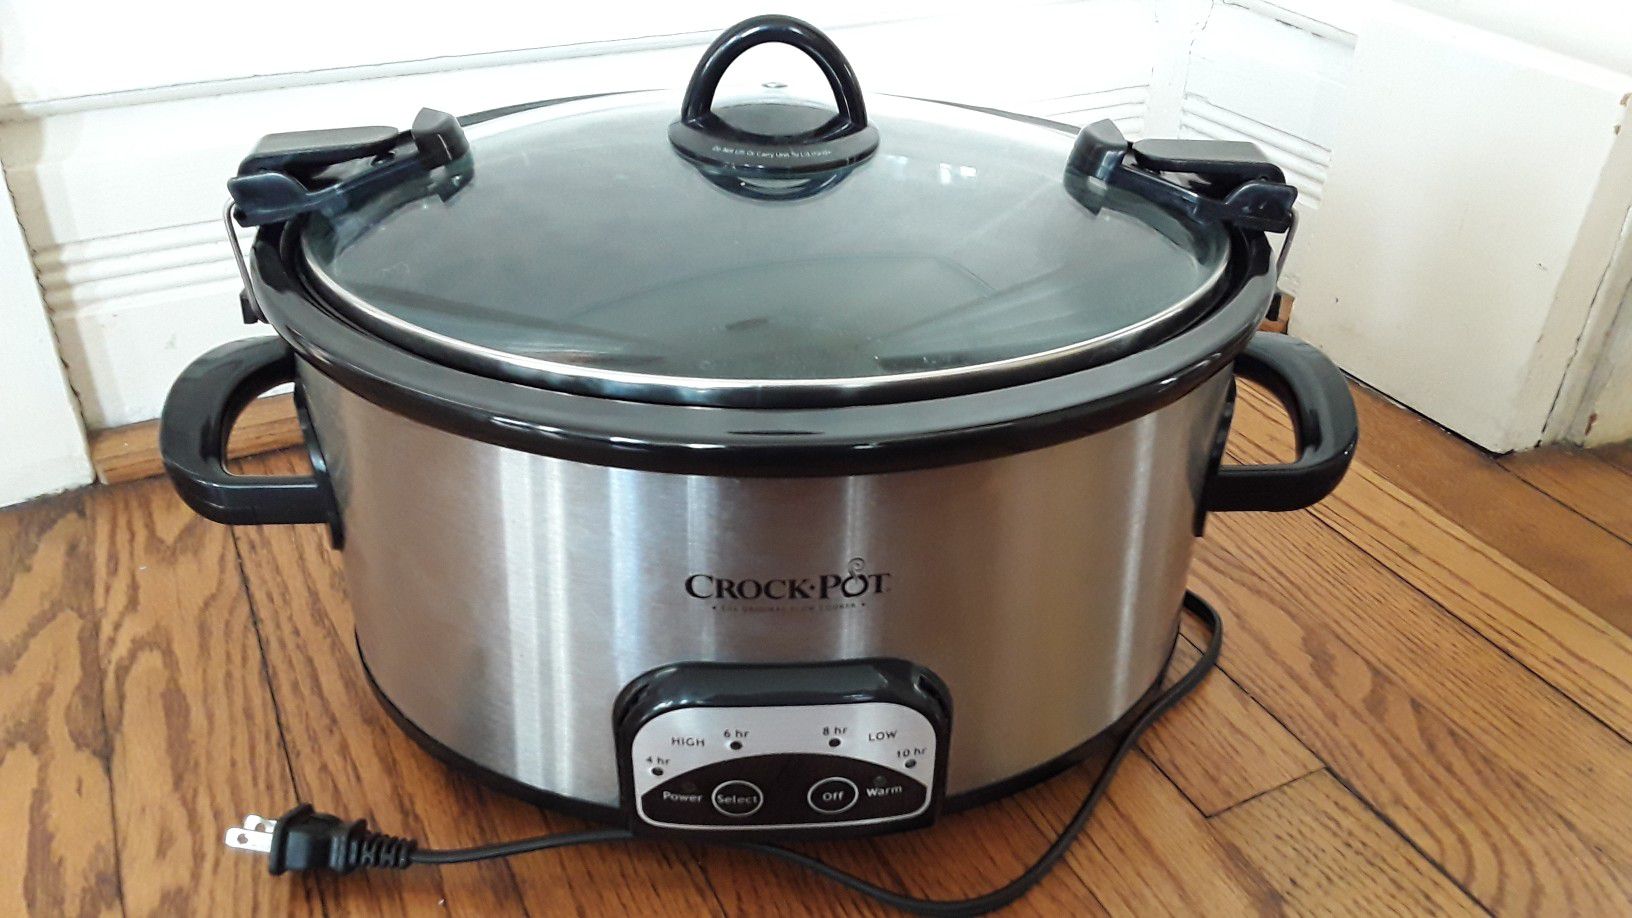 Crock pot 6 quart programmable cook and carry model sccpvl605.s.a